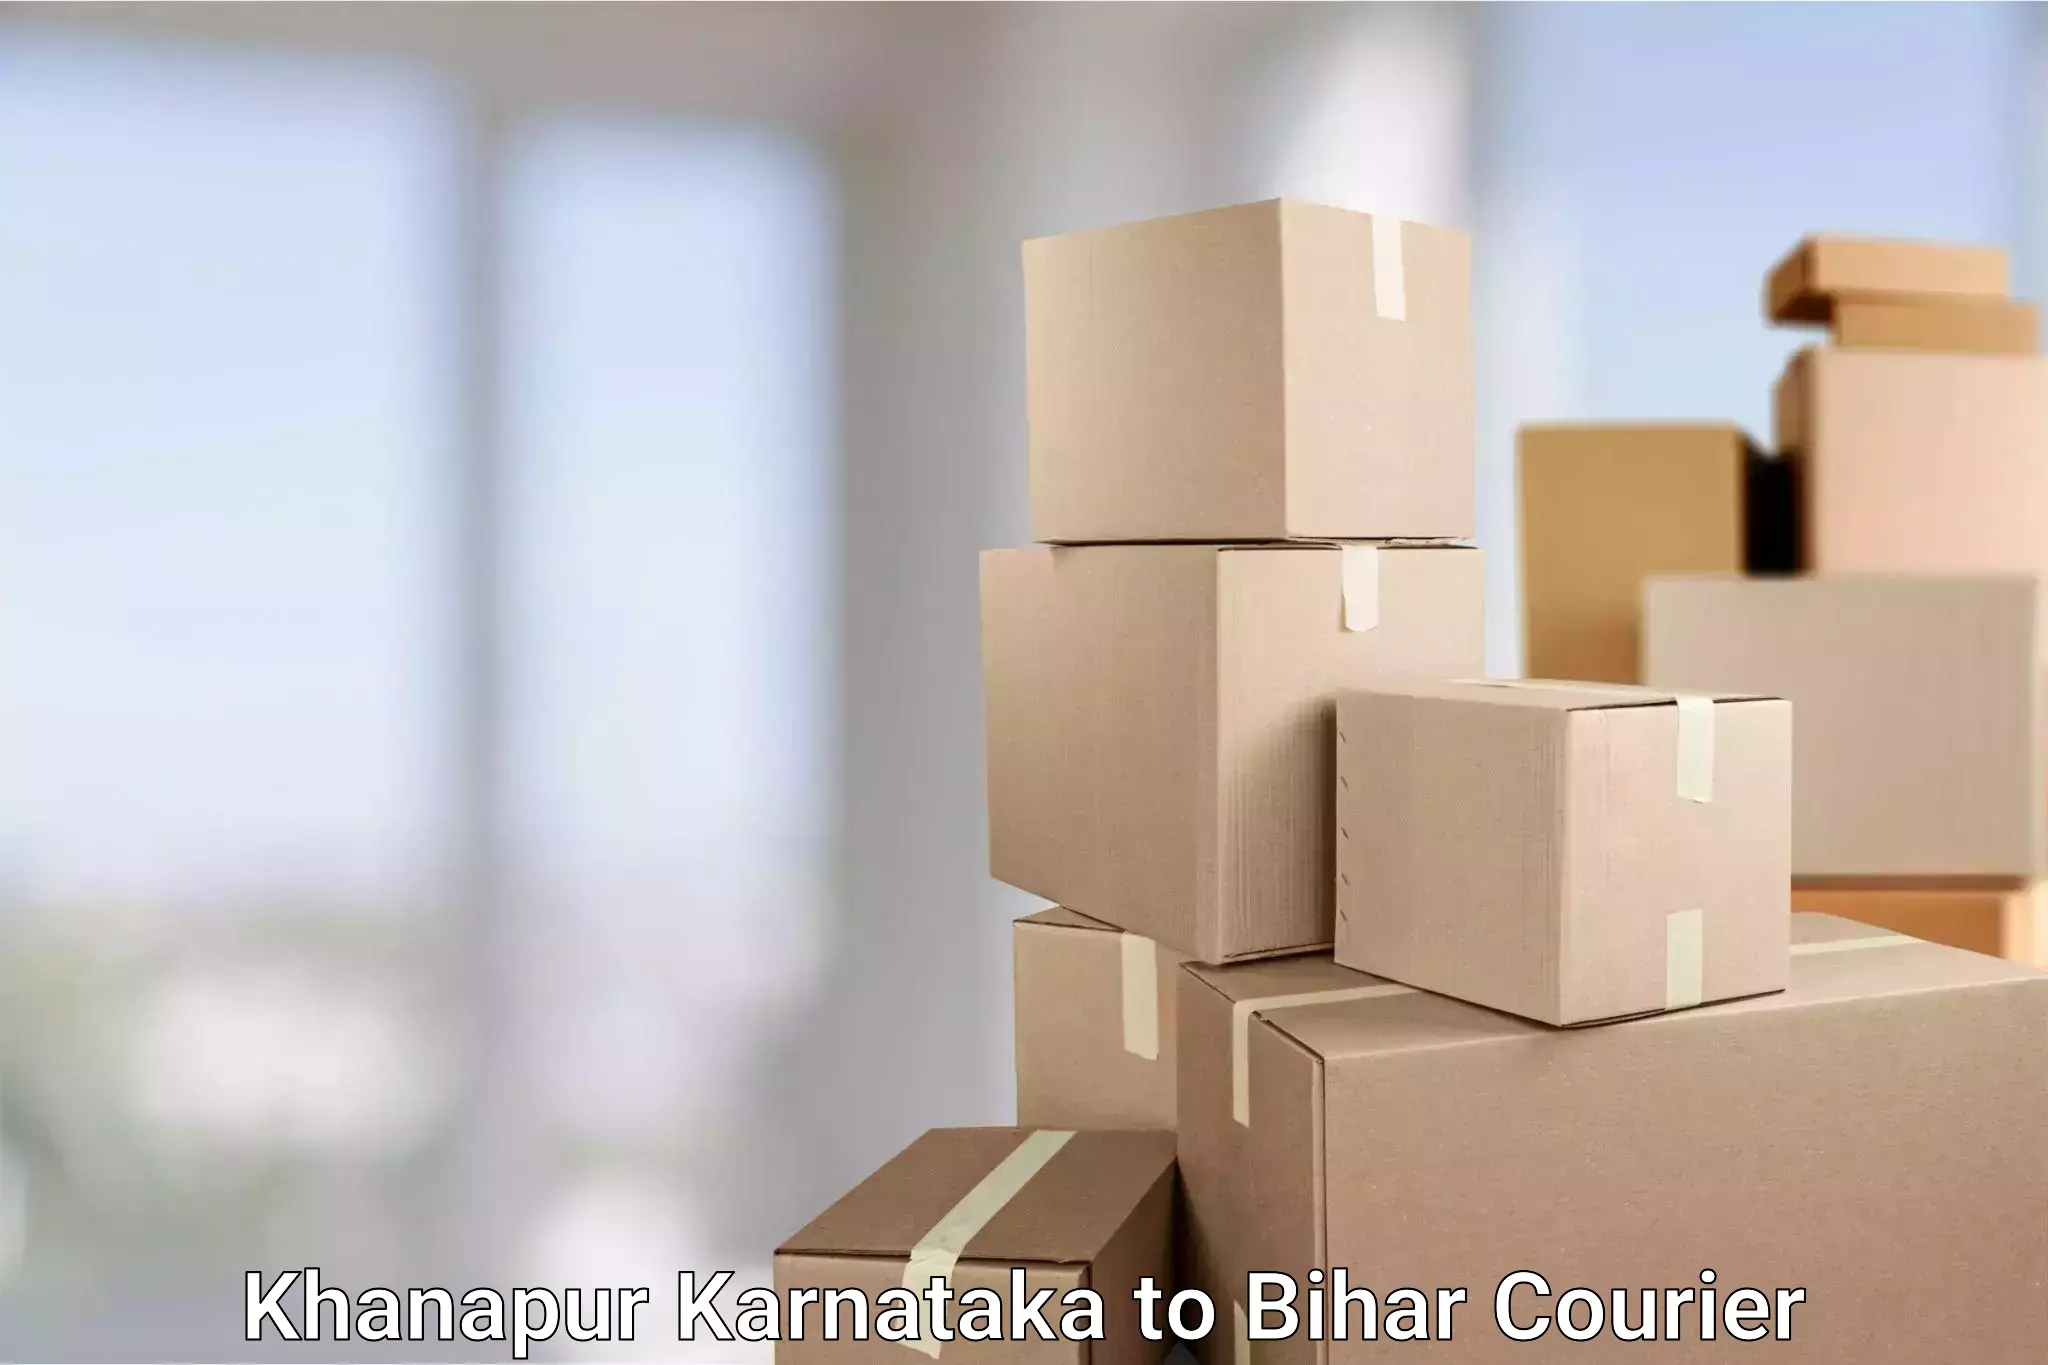 Efficient courier operations Khanapur Karnataka to Aurangabad Bihar